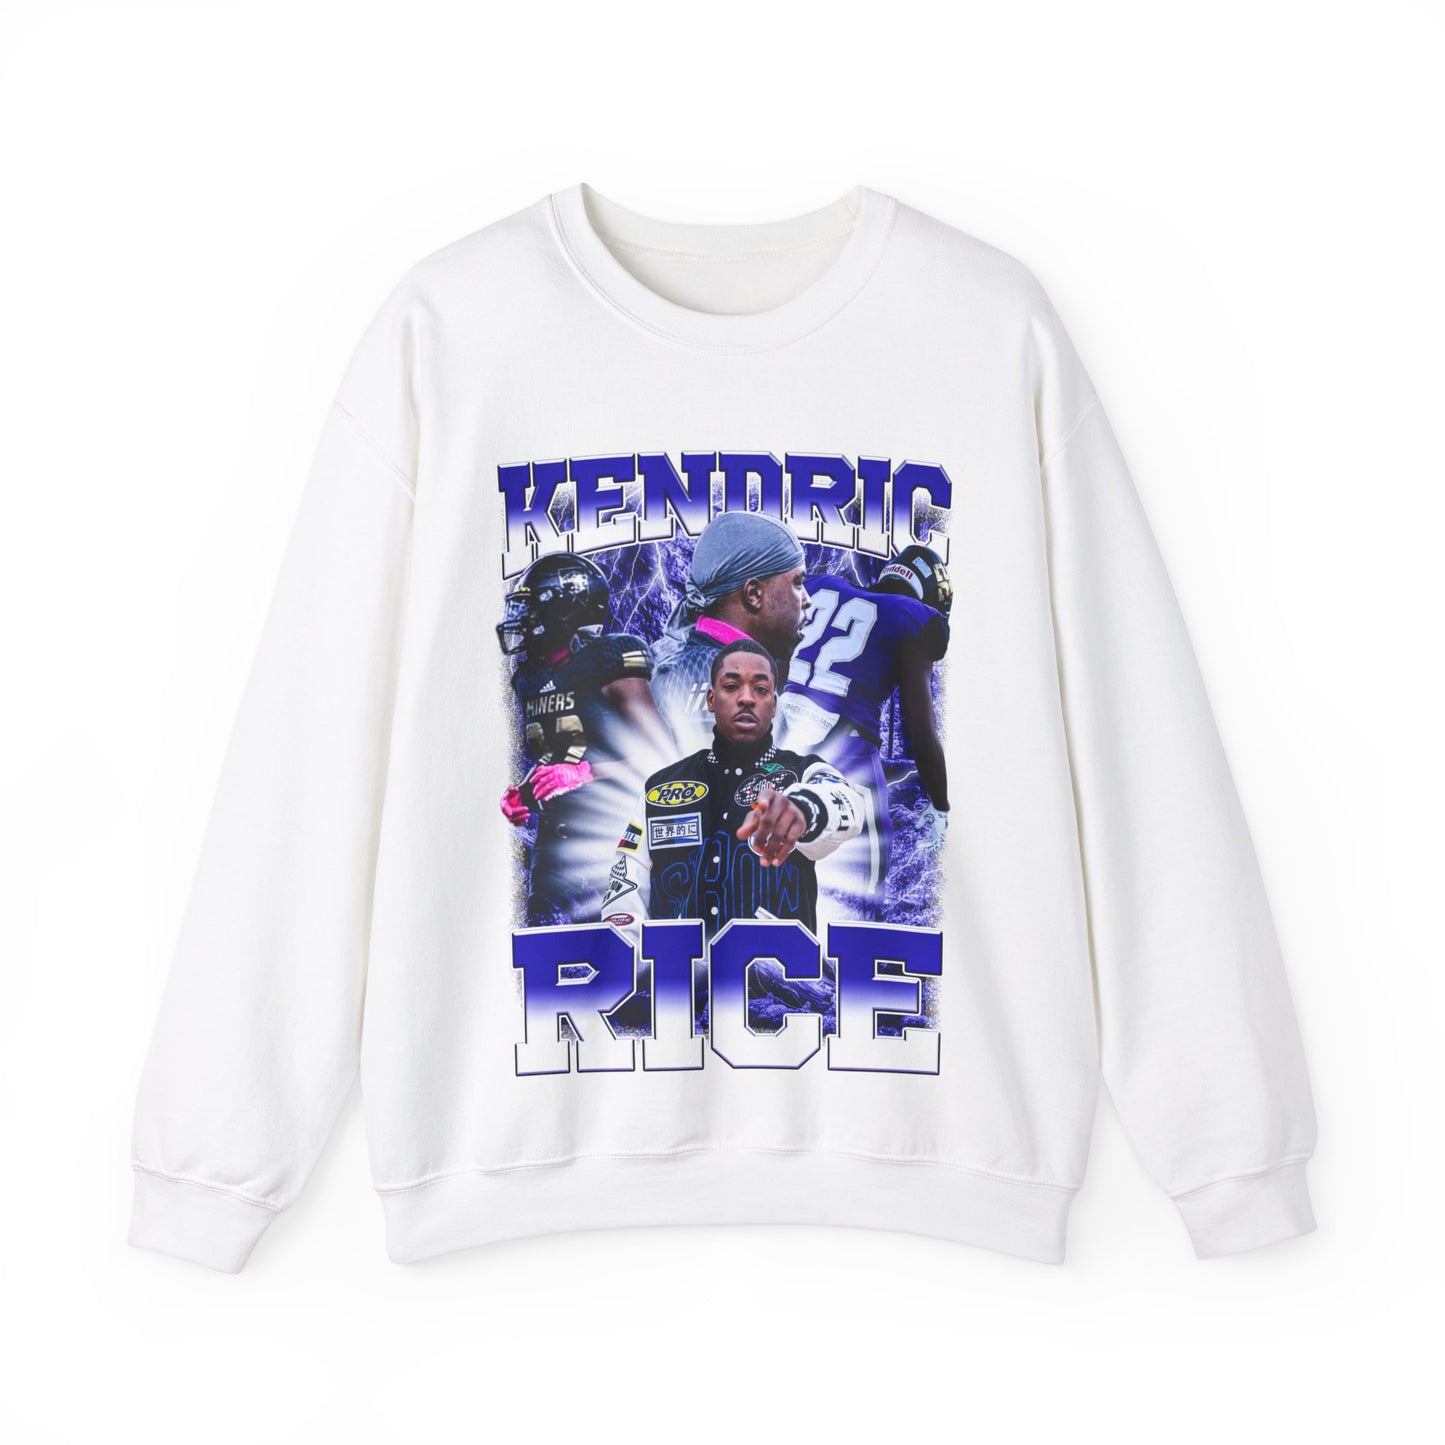 Kendric Rice Crewneck Sweatshirt